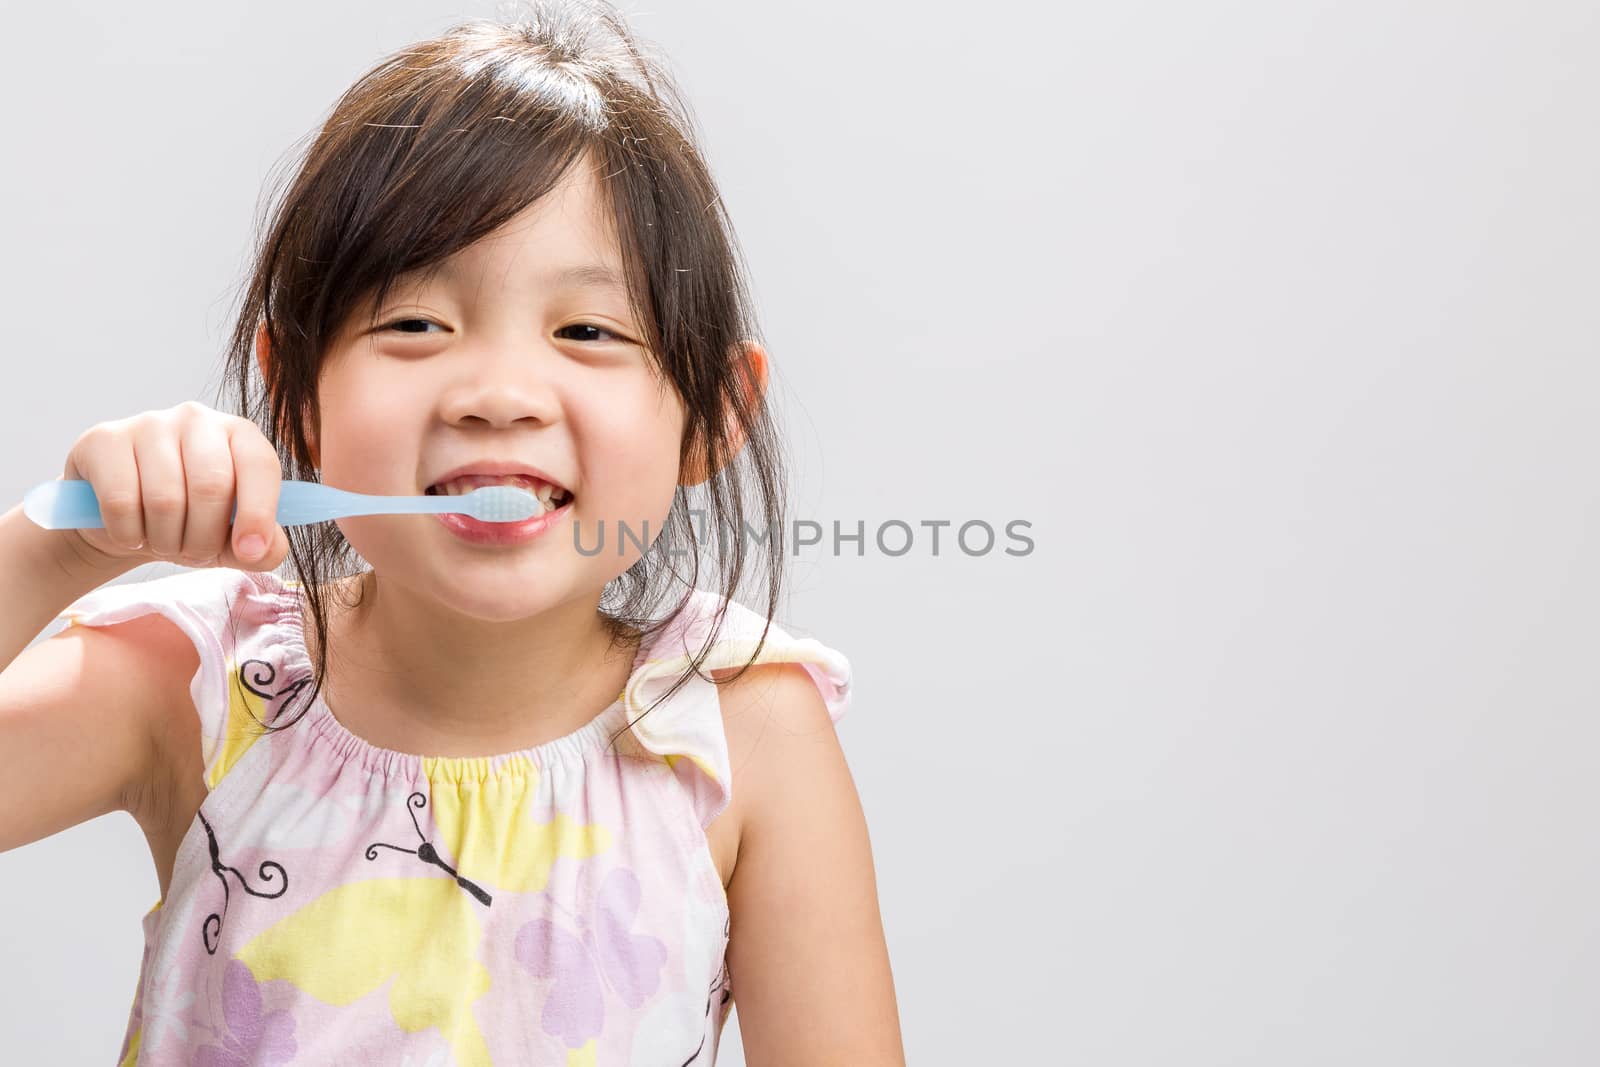 Child Brushing Teeth Background / Child Brushing Teeth / Child B by supparsorn